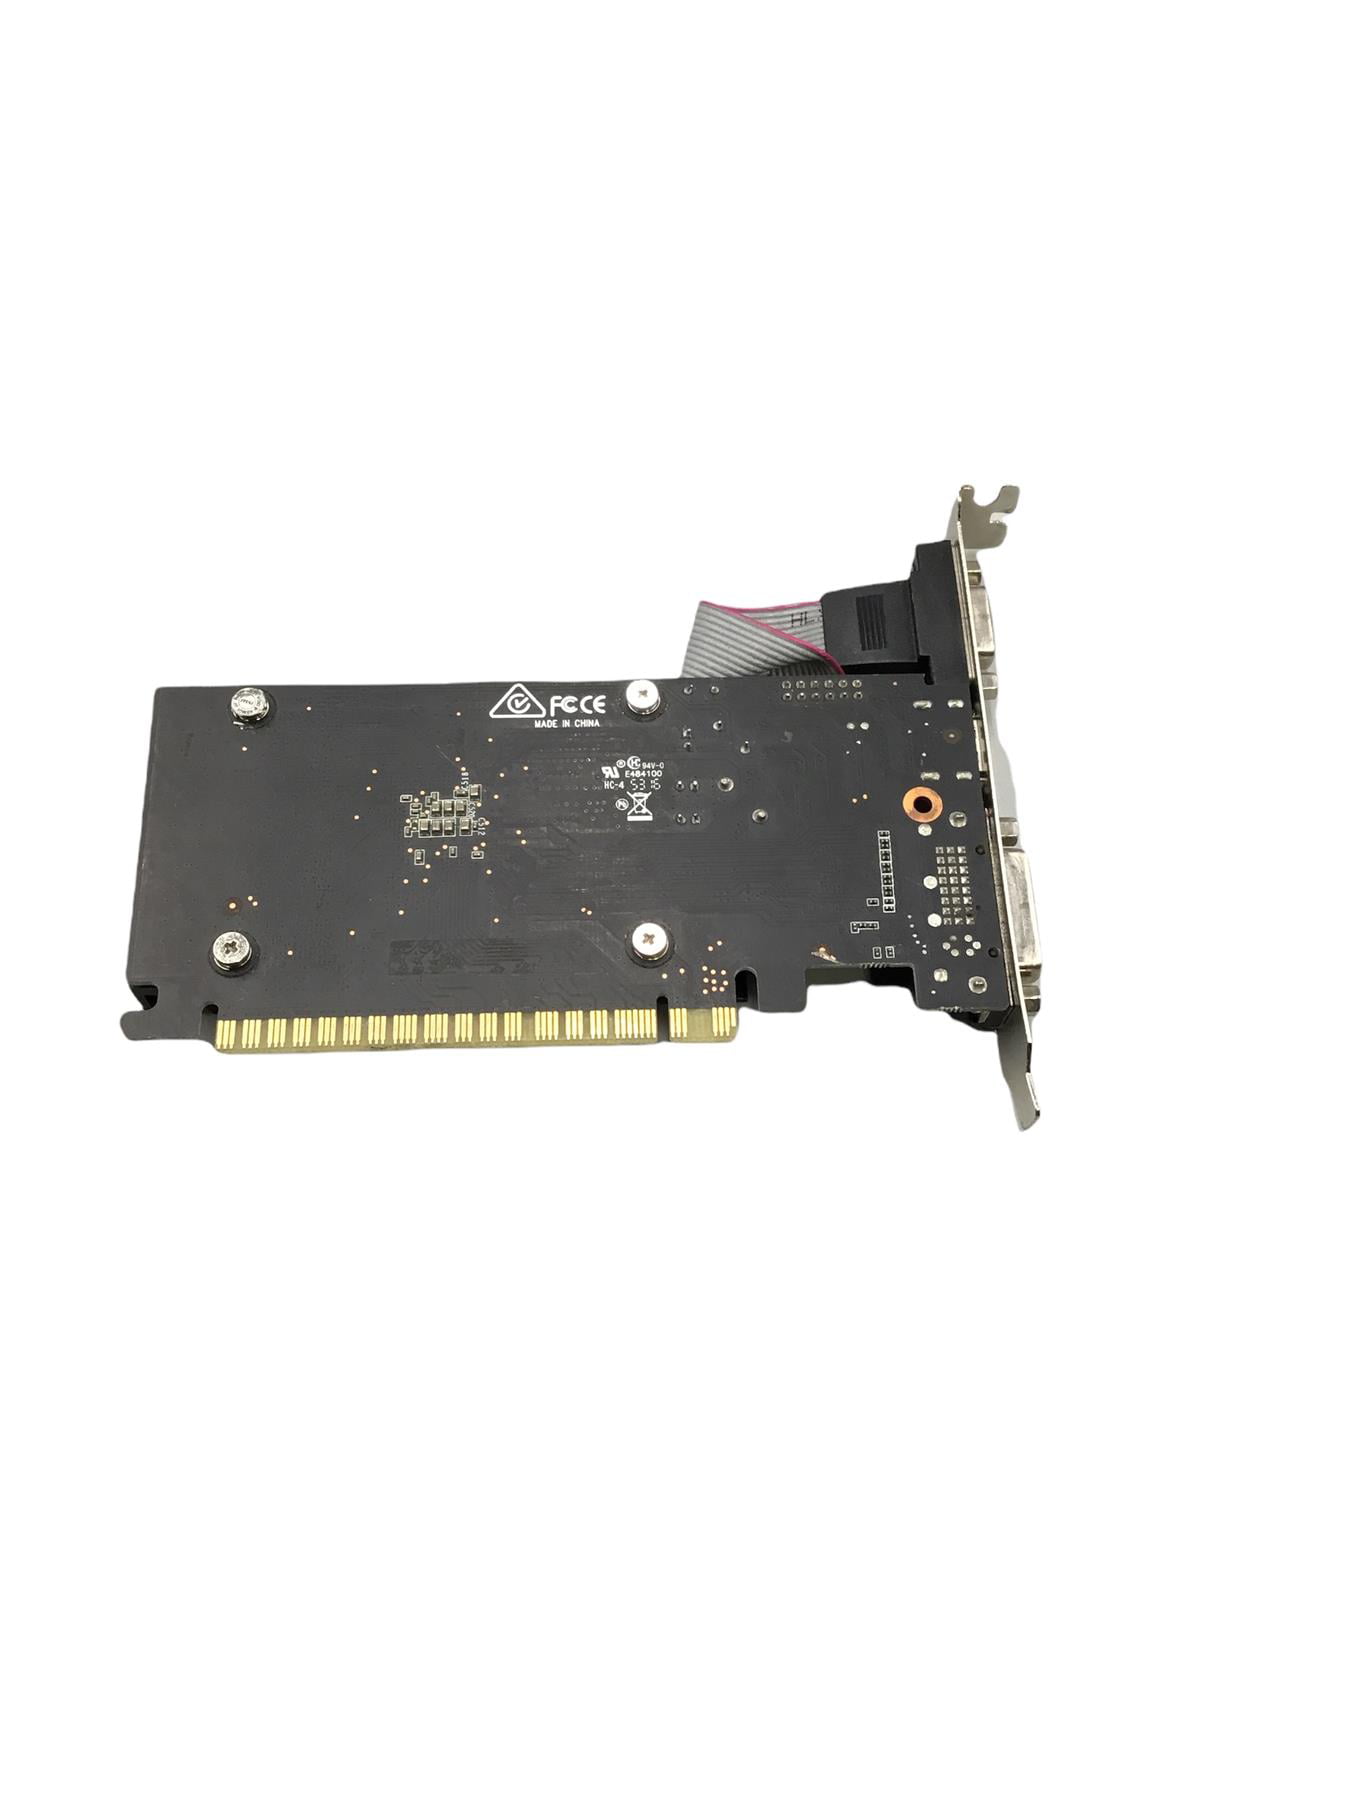 MSI GeForce GT 710 1GB DDR3 Graphics Card (GT 710 1GD3 LP) PCI-e VGA, HDMI,  DVI